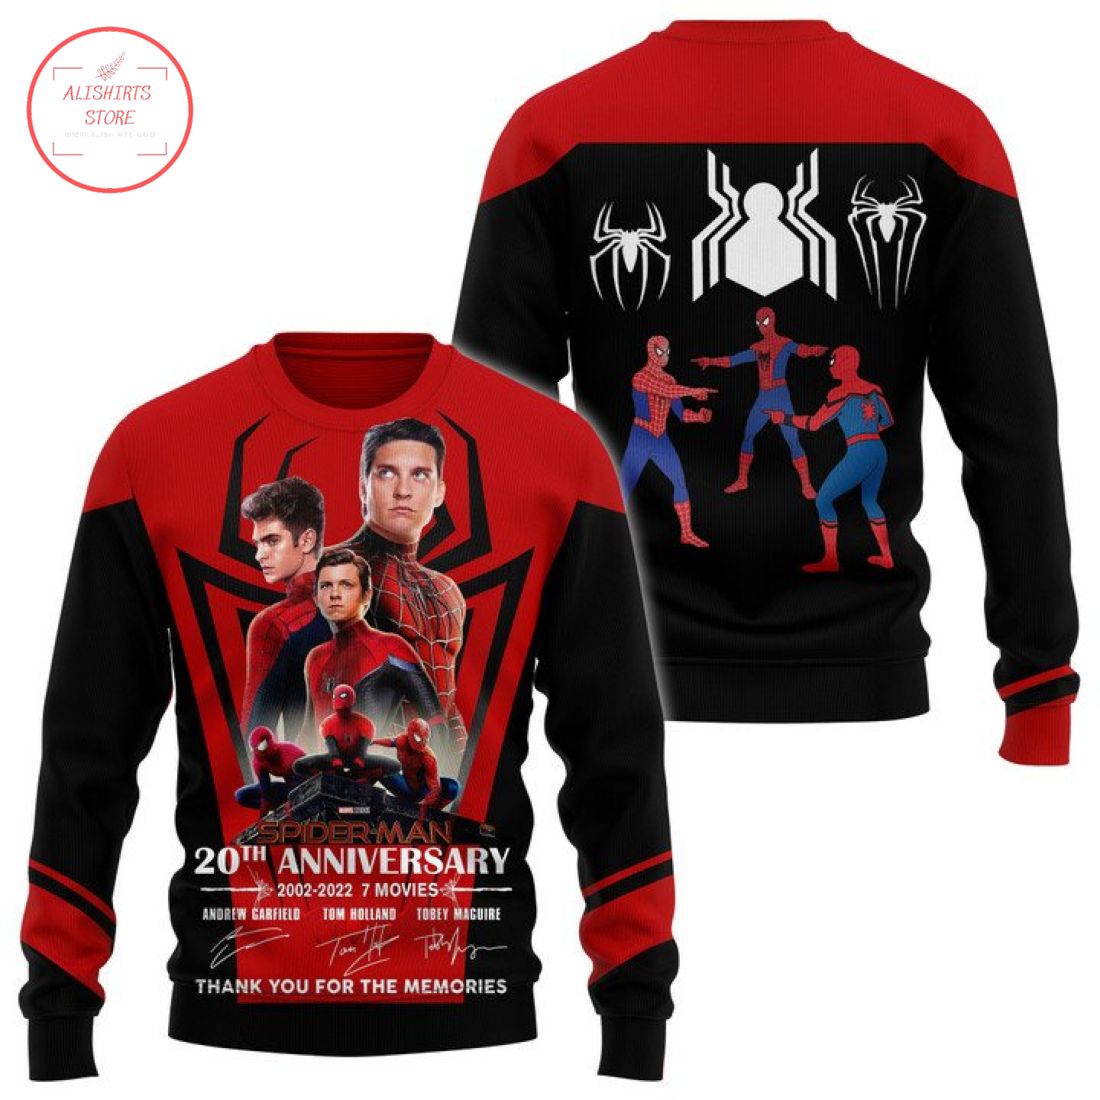 Spider-Man 20th Anniversary 2002 2022 3d Shirts